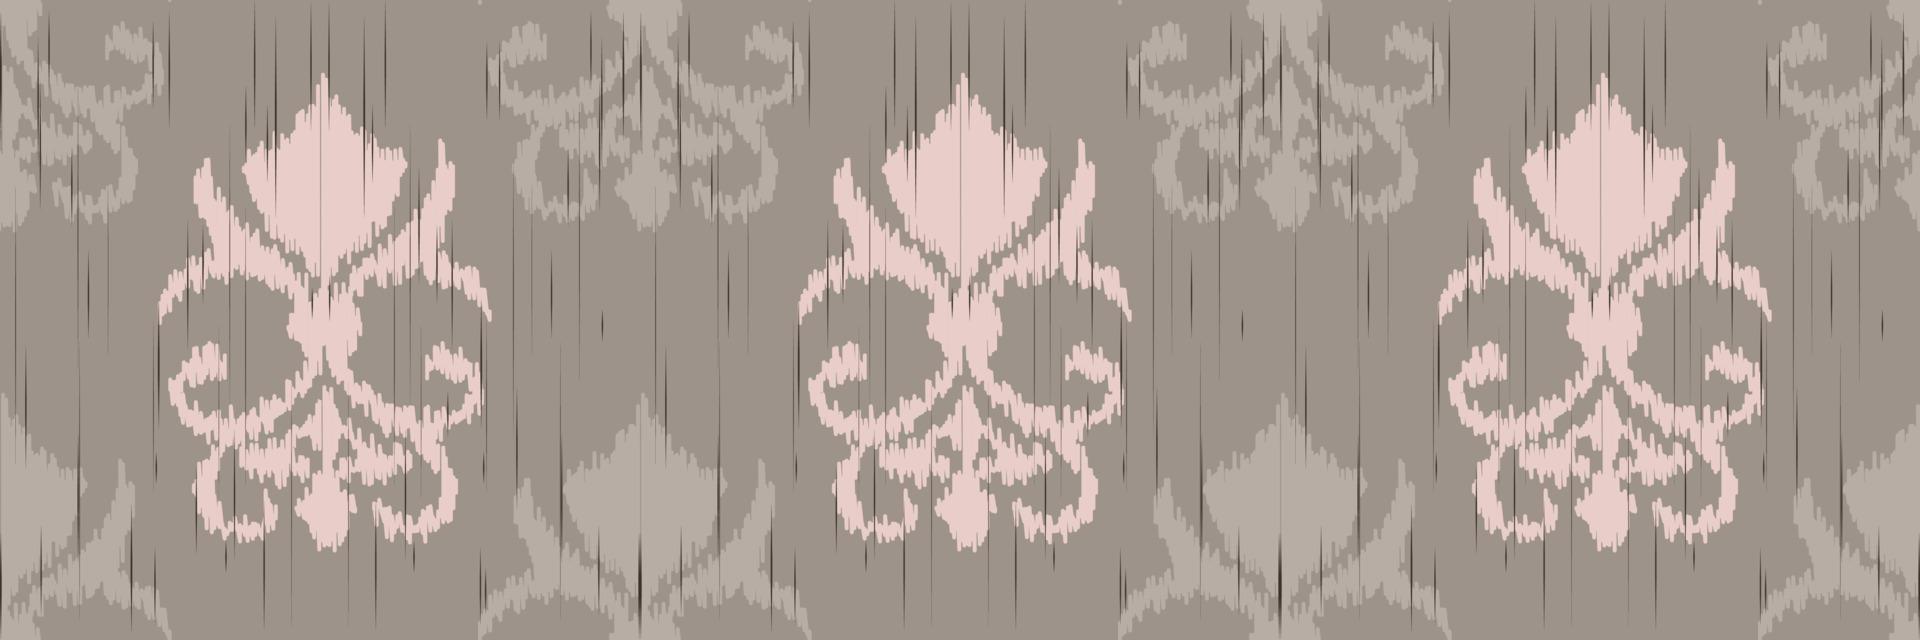 ikat damasco bordado escandinavo, ikat sem costura tribal asteca, motivo vetorial digital têxtil design asiático arte antiga para estampas tecido saree mughal faixas textura kurti kurtis kurtas vetor